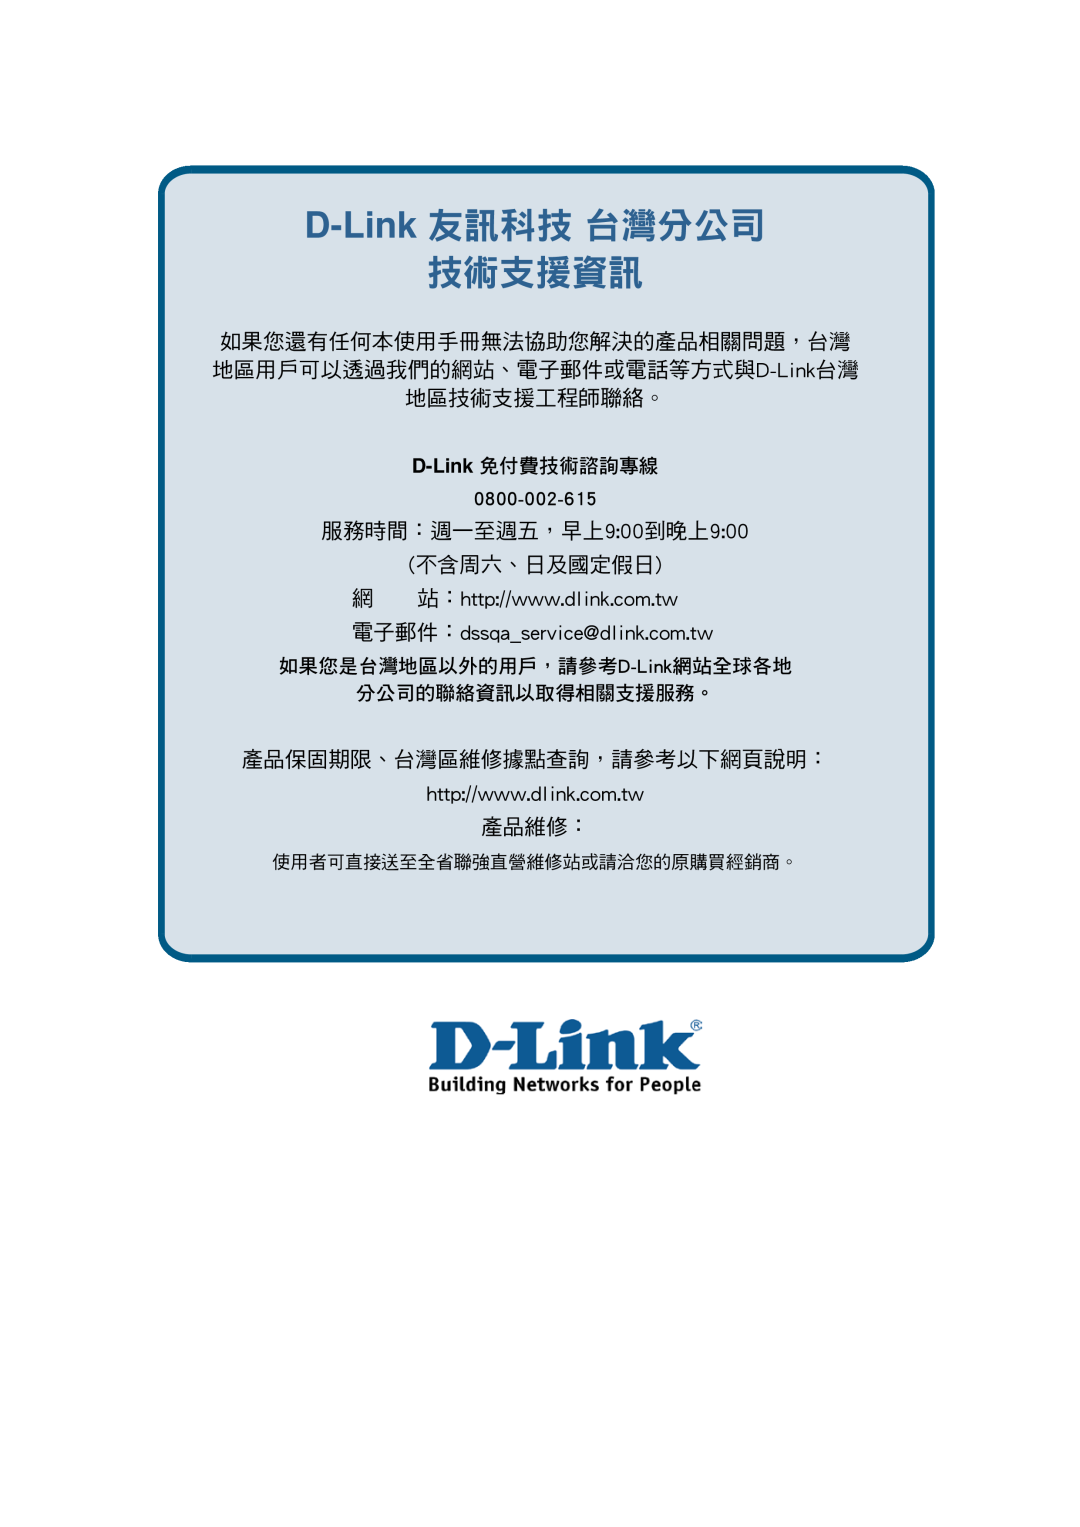 D-Link ethernet managed switch D-Link 友訊科技 台灣分公司 技術支援資訊, 服務時間：週一至週五，早上900到晚上900 不含周六、日及國定假日, 產品保固期限、台灣區維修據點查詢，請參考以下網頁說明： 